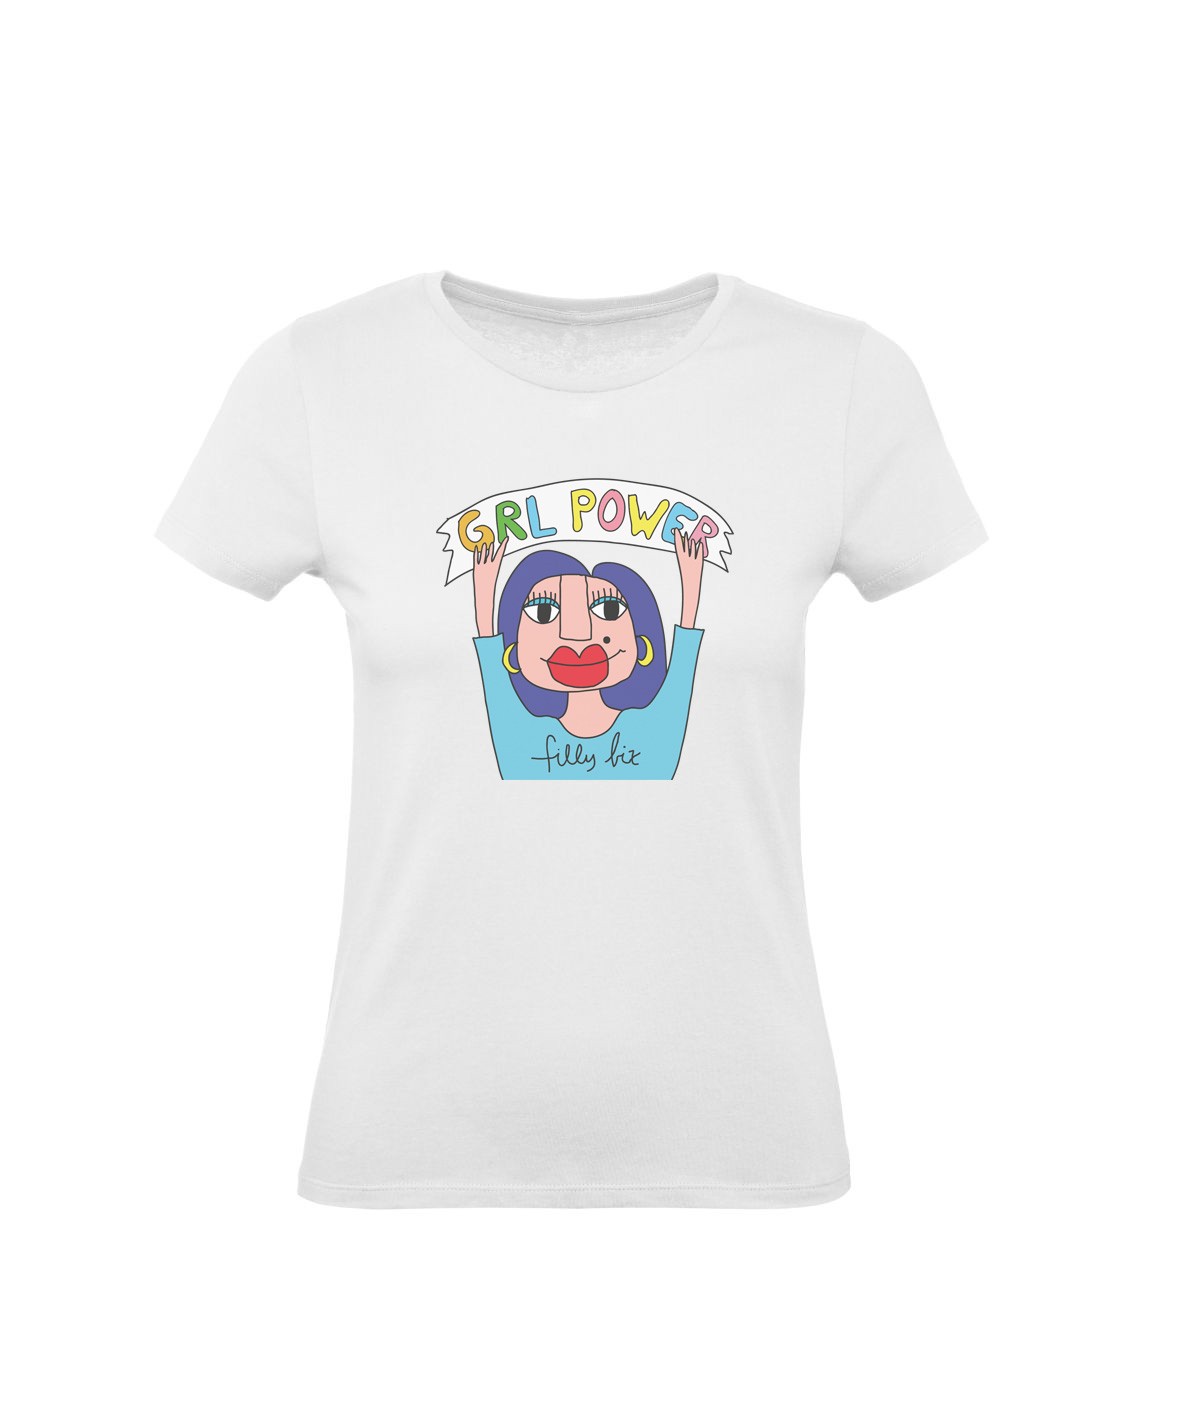 Girl power ● printed t-shirt